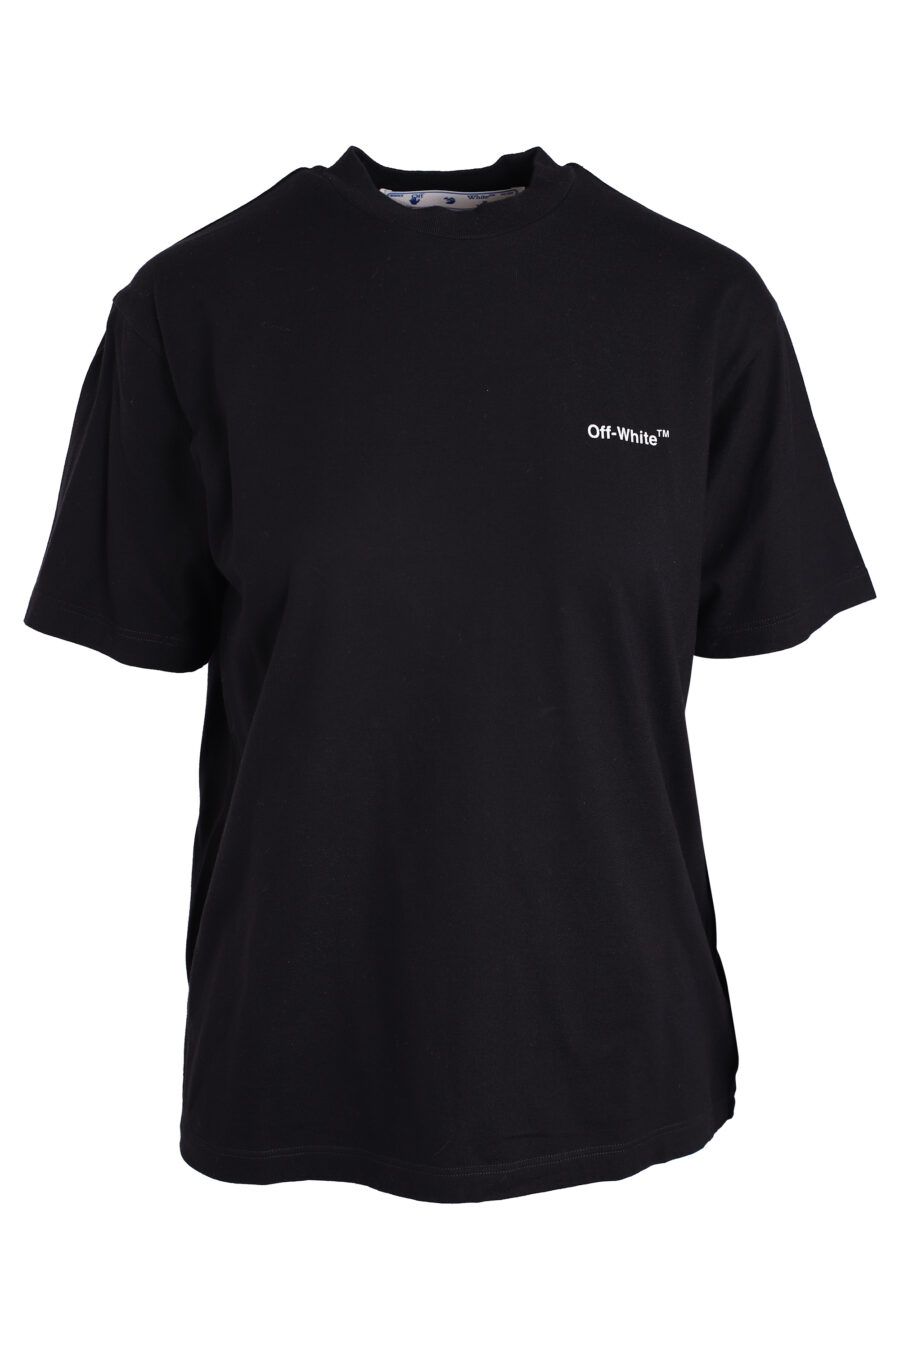 Camiseta negra con logo "Diagonal regular" - IMG 3383